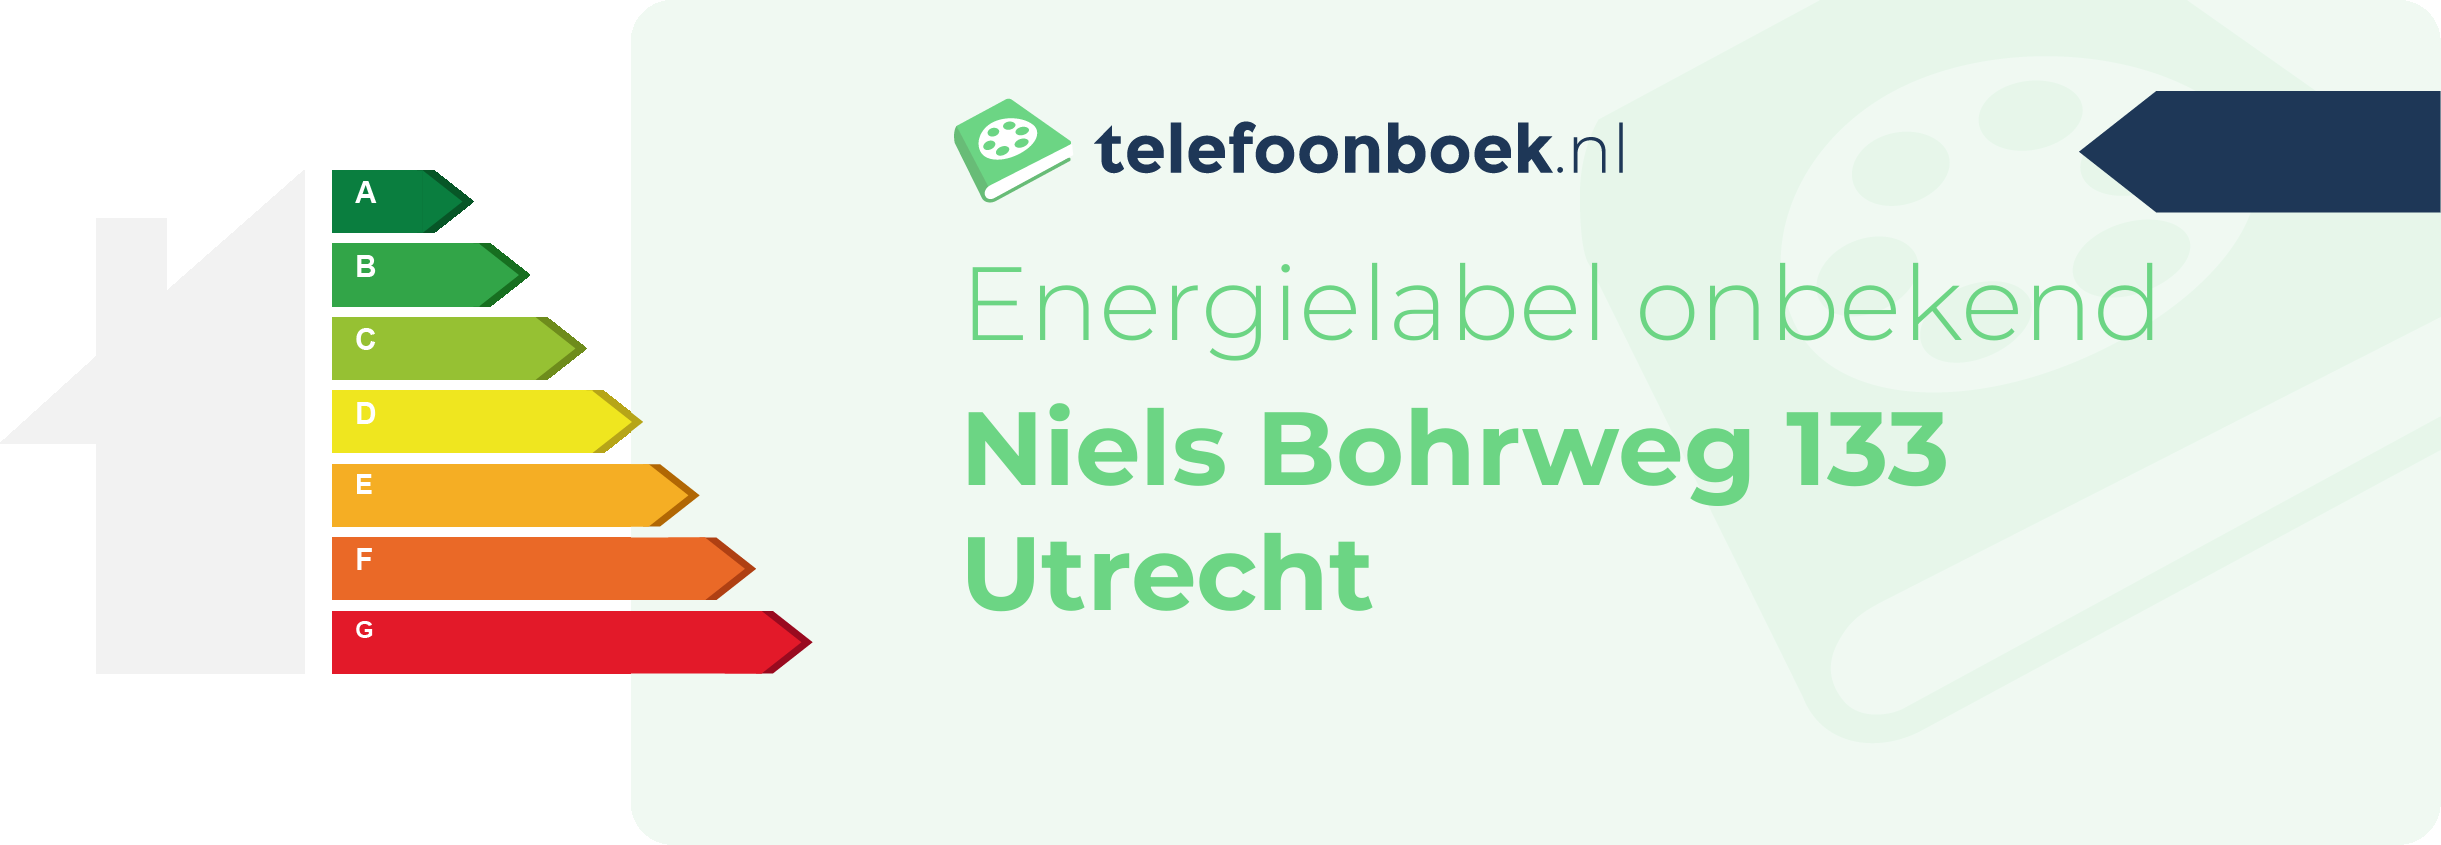 Energielabel Niels Bohrweg 133 Utrecht